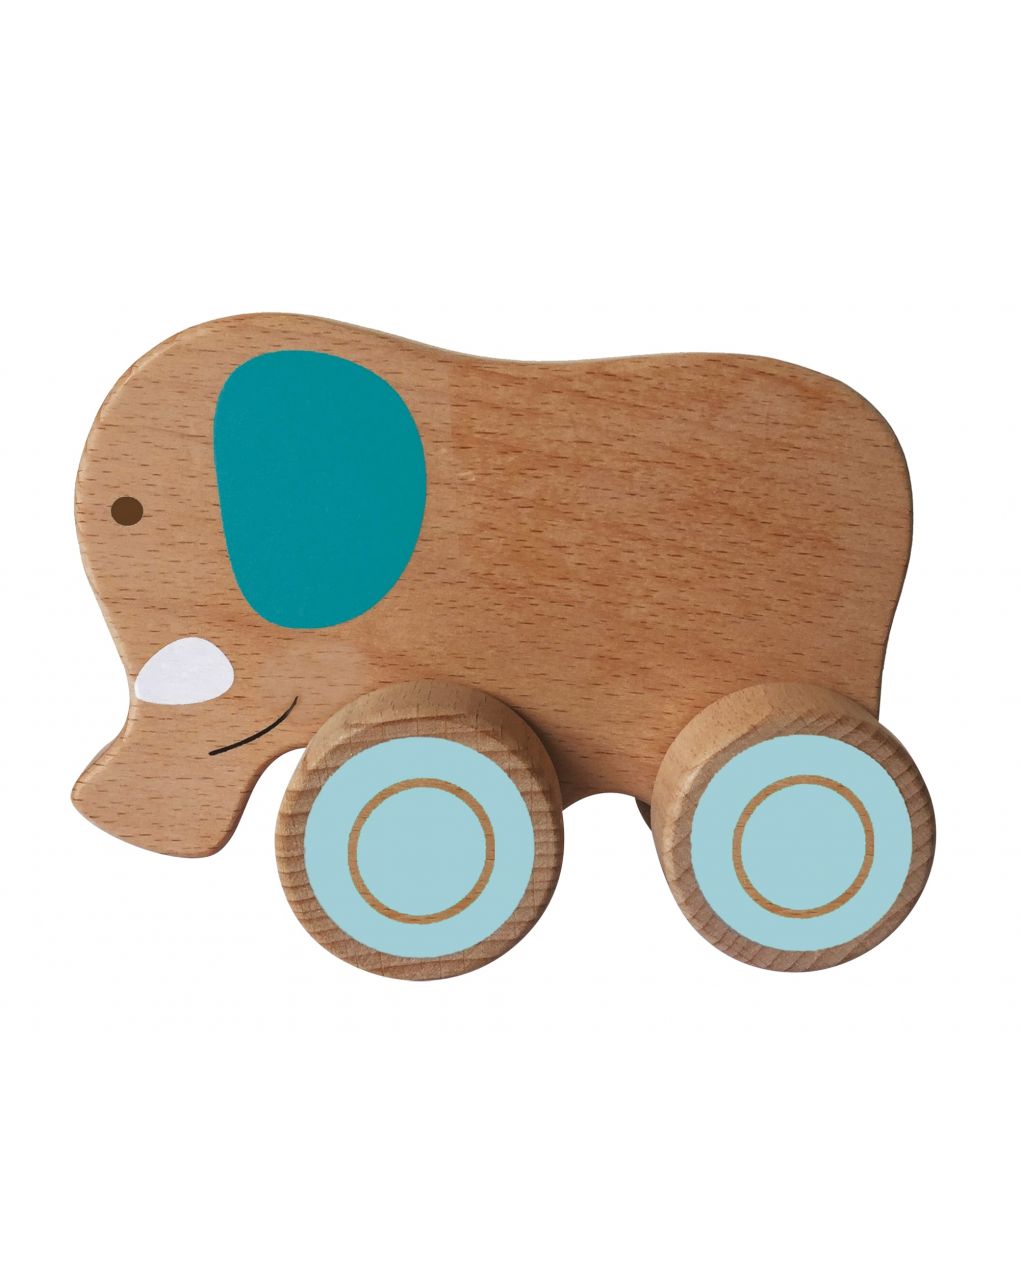 Wood n play - animali in legno con ruote - Wood'N'Play